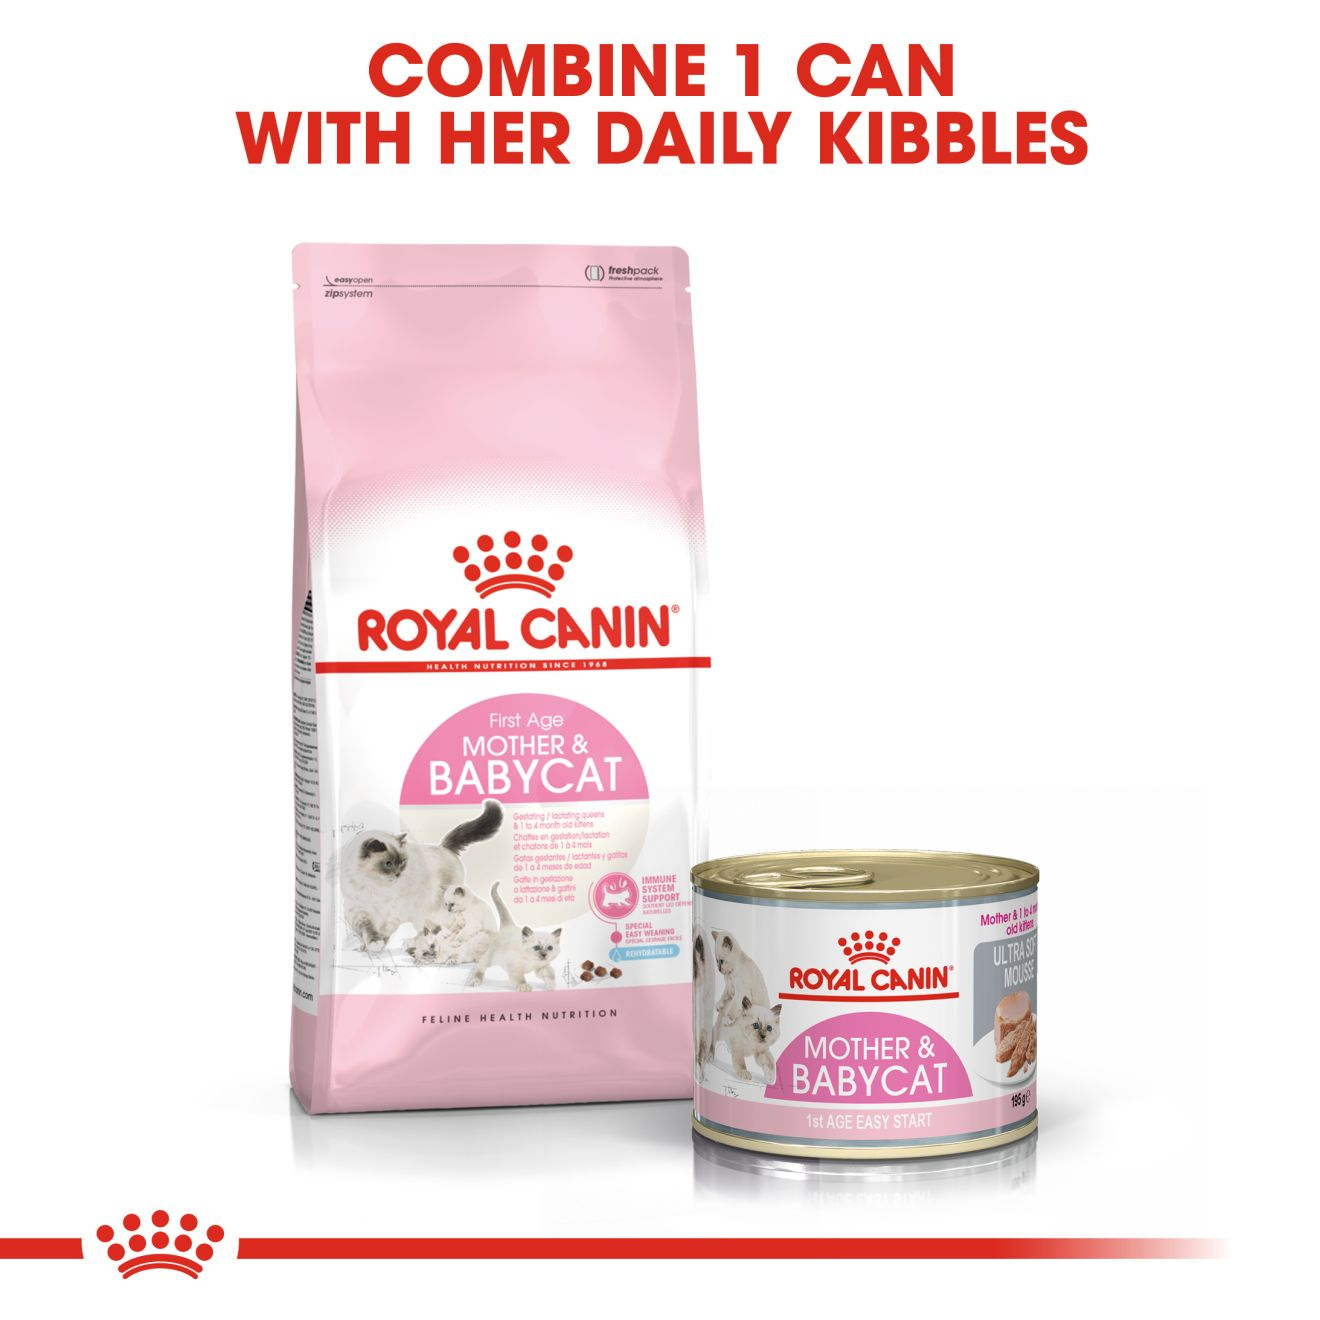 royal canin babycat instinctive mousse